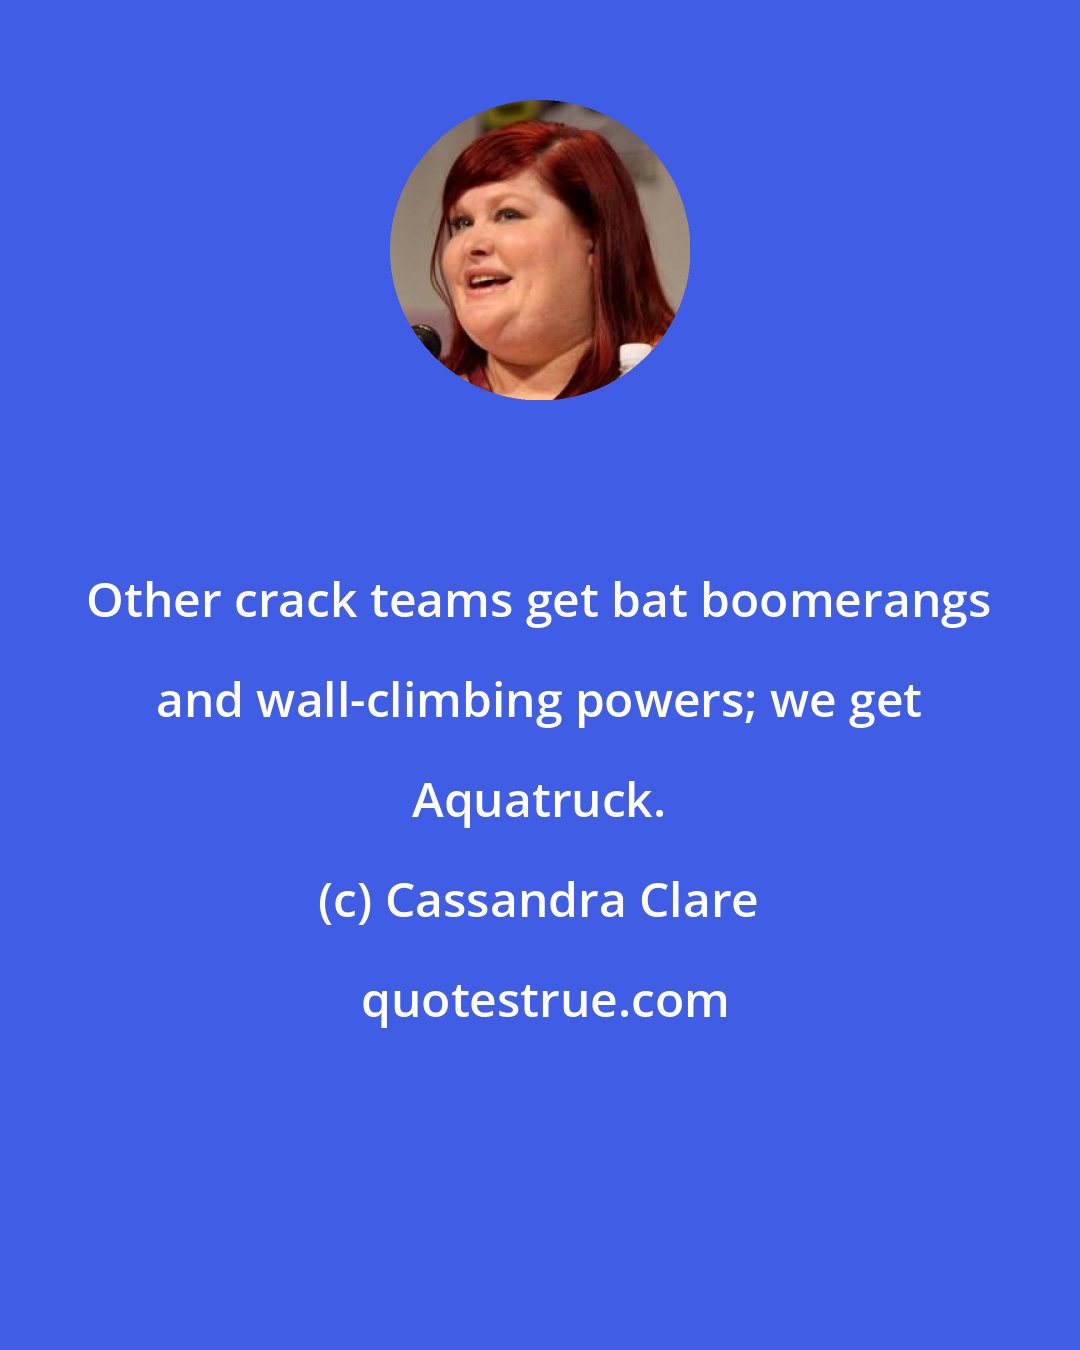 Cassandra Clare: Other crack teams get bat boomerangs and wall-climbing powers; we get Aquatruck.